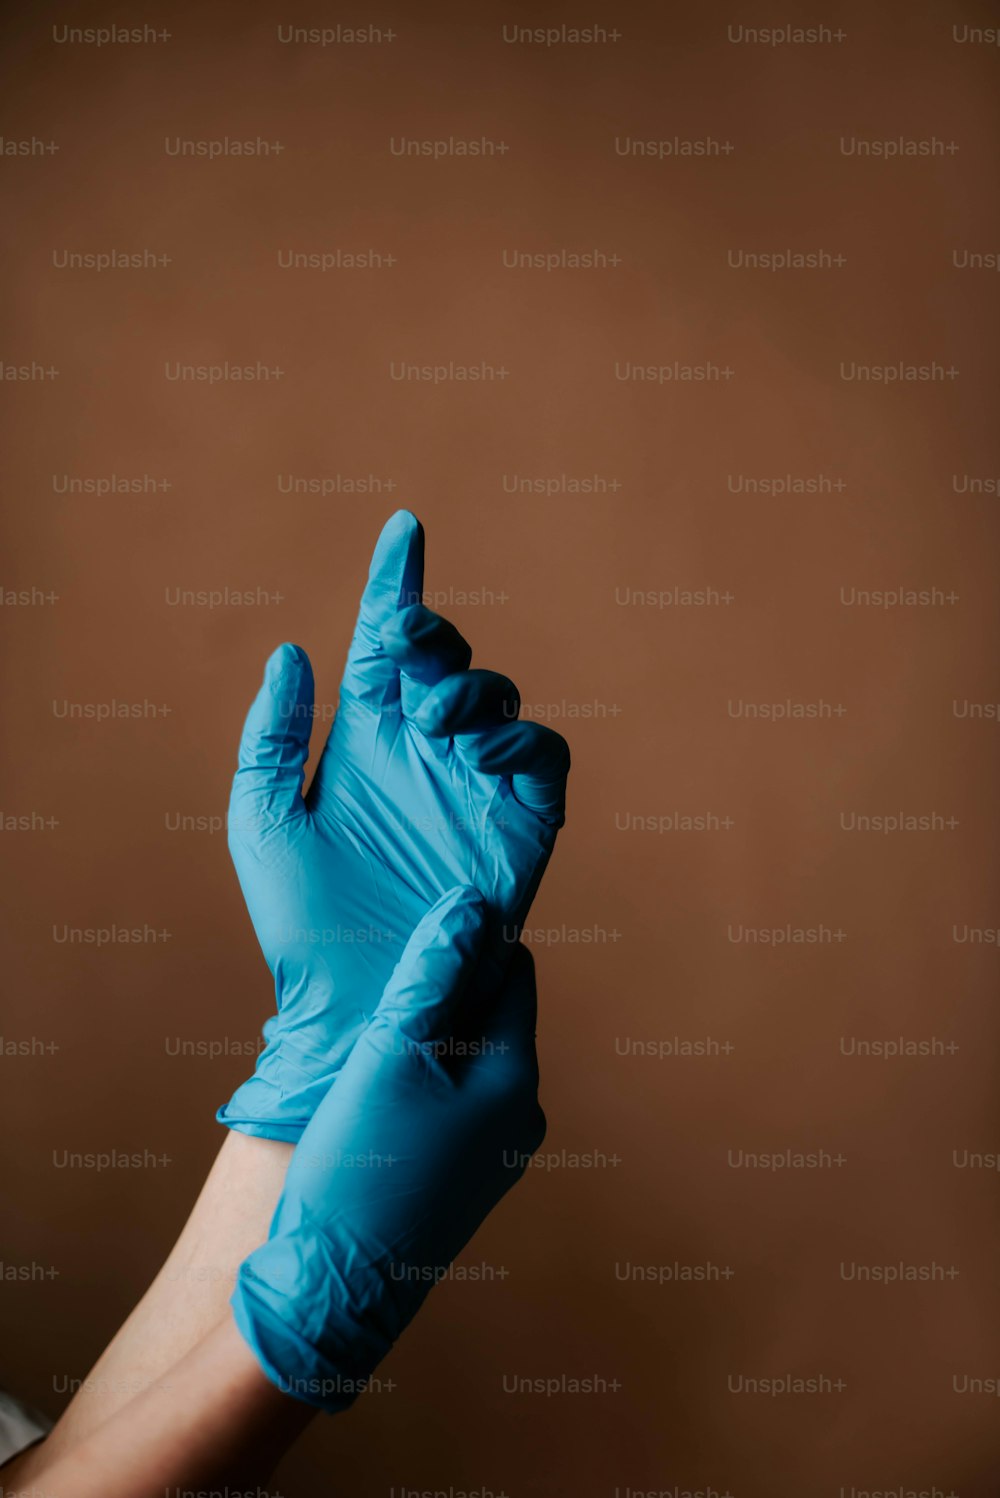 Una persona con guantes azules levantando la mano